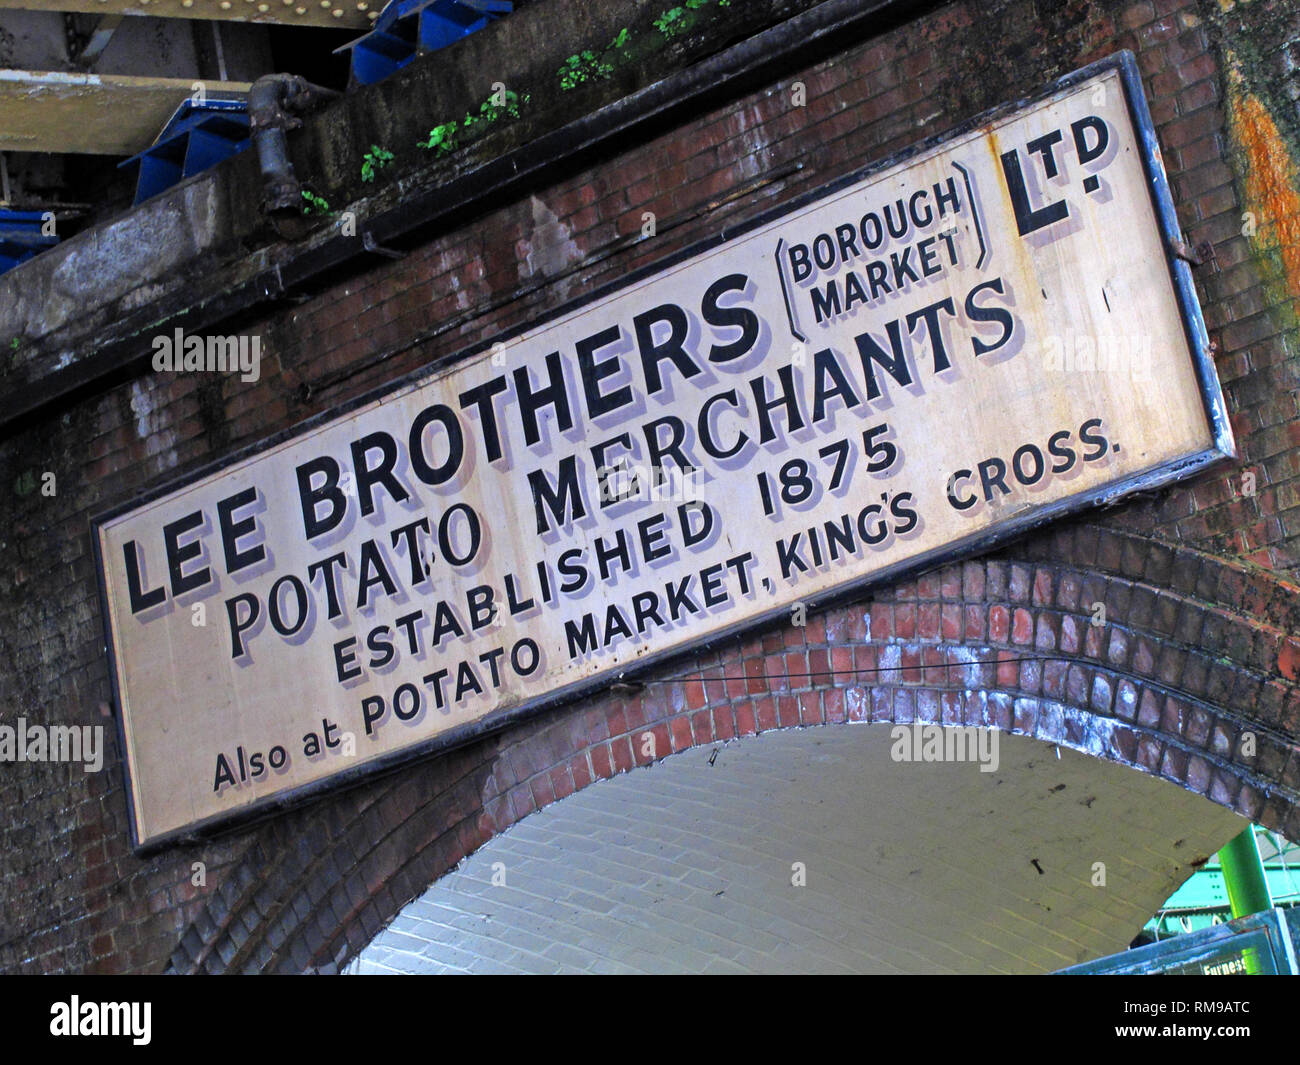 Lee Brothers, Borough Market, Potato Merchants Sign (gegründet 1875), Southwark, London, Südostengland, Vereinigtes Königreich, Stockfoto